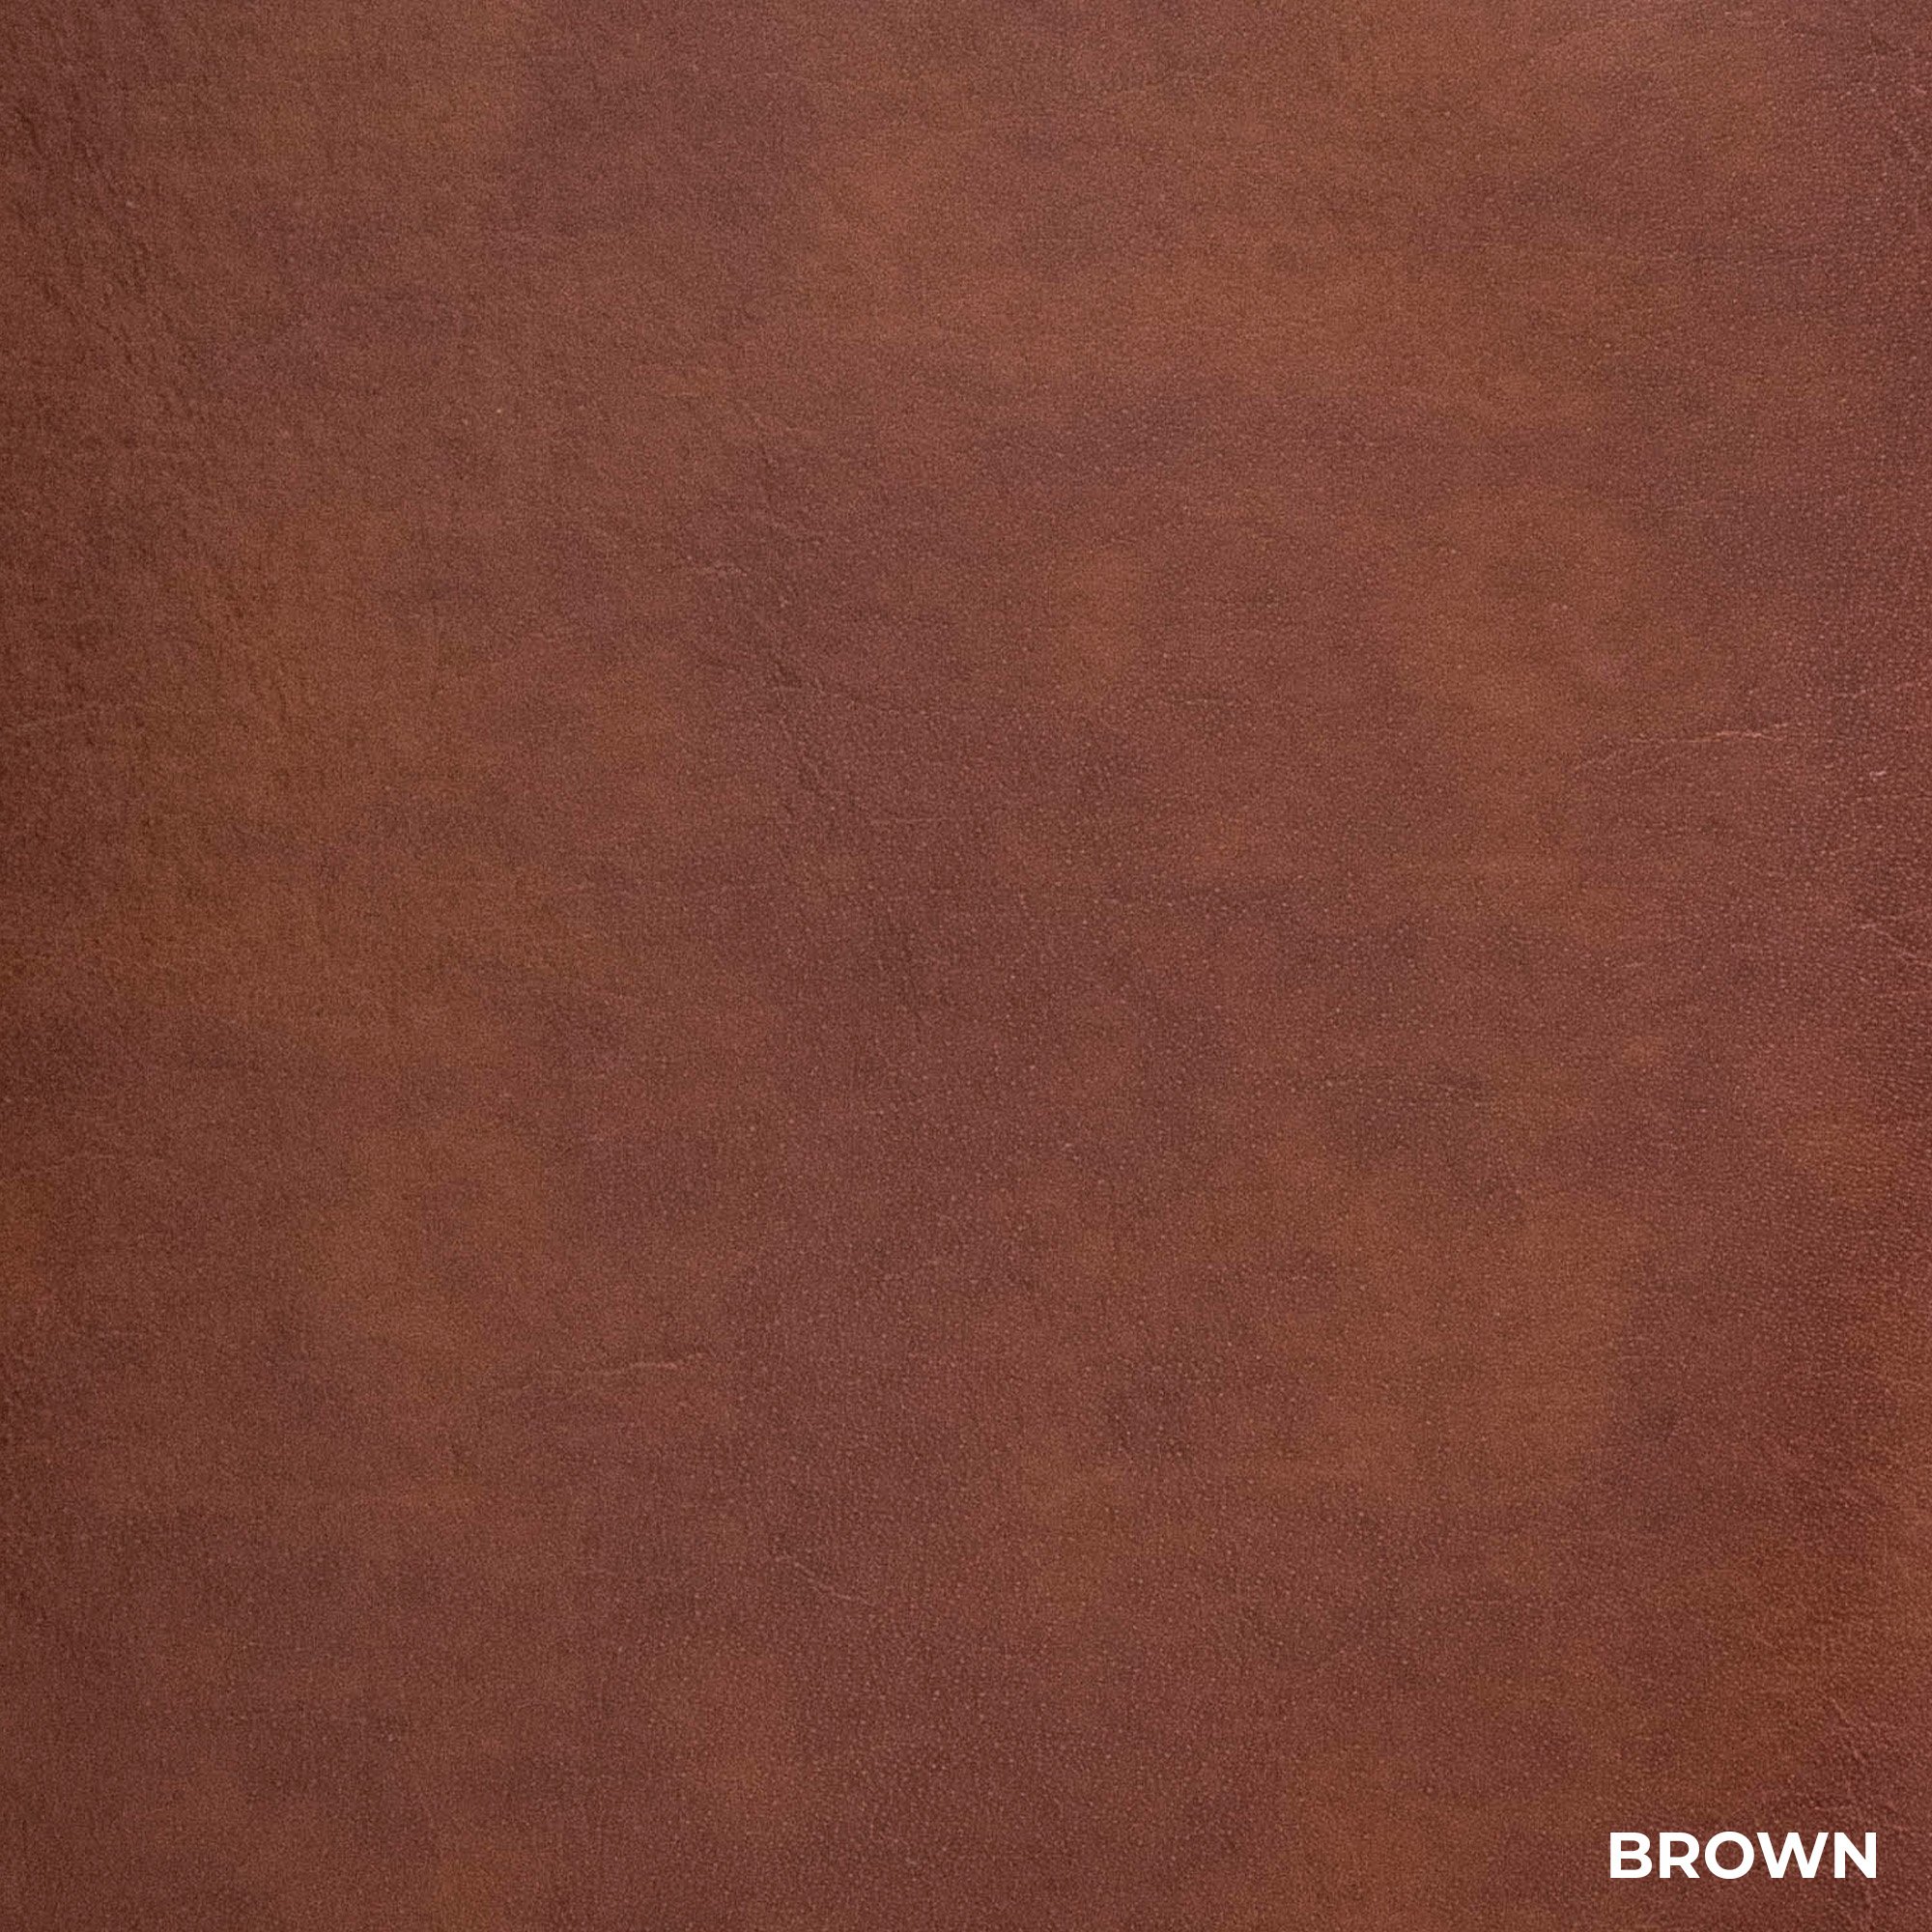 Brown Tuxedo Leather